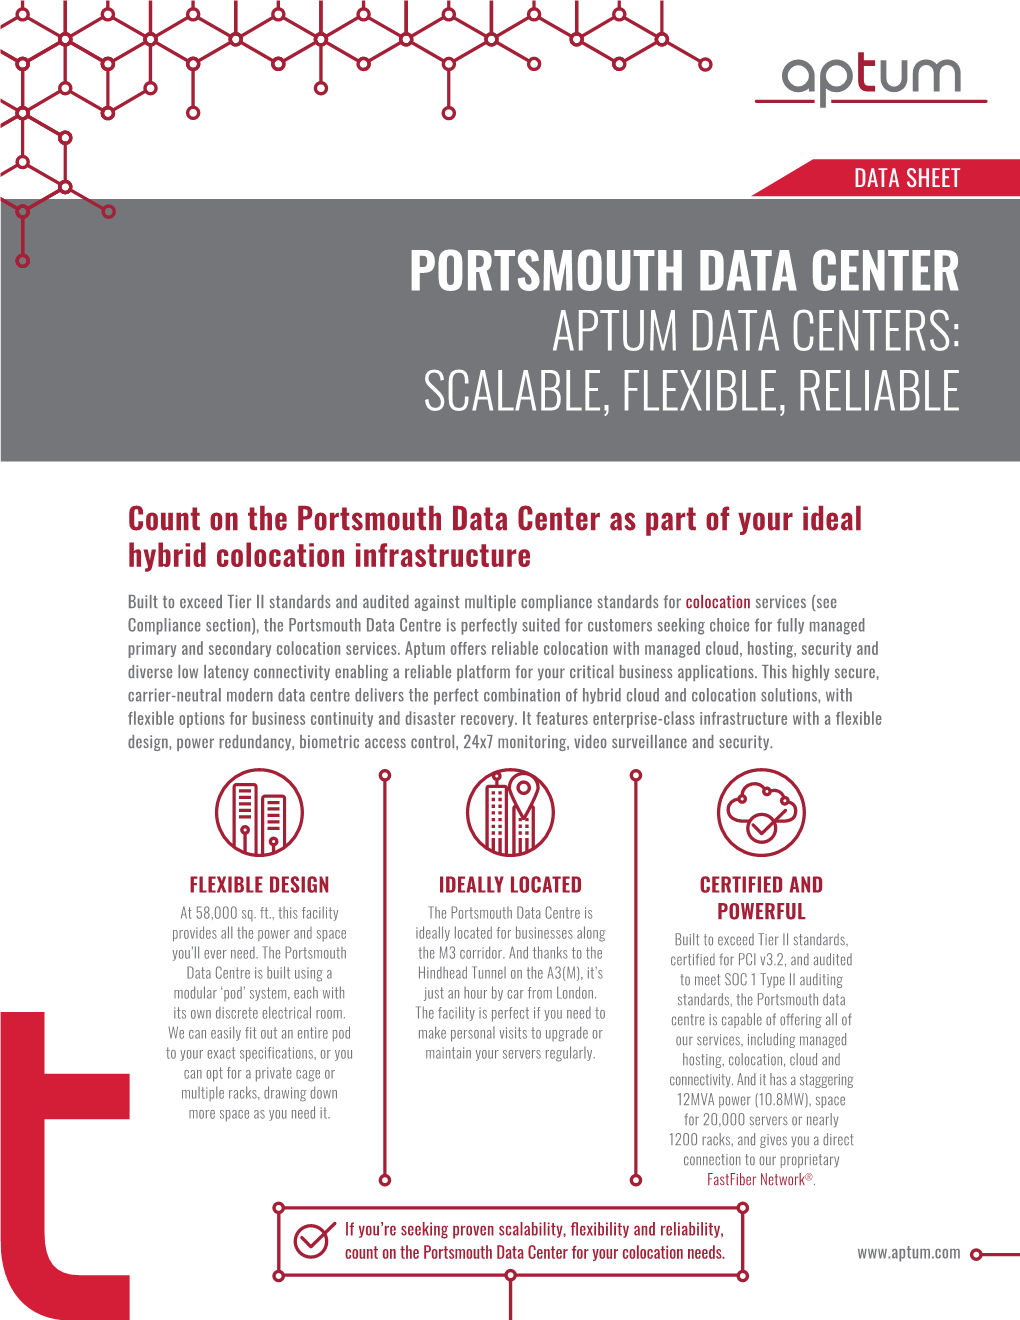 Portsmouth Data Center Aptum Data Centers: Scalable, Flexible, Reliable